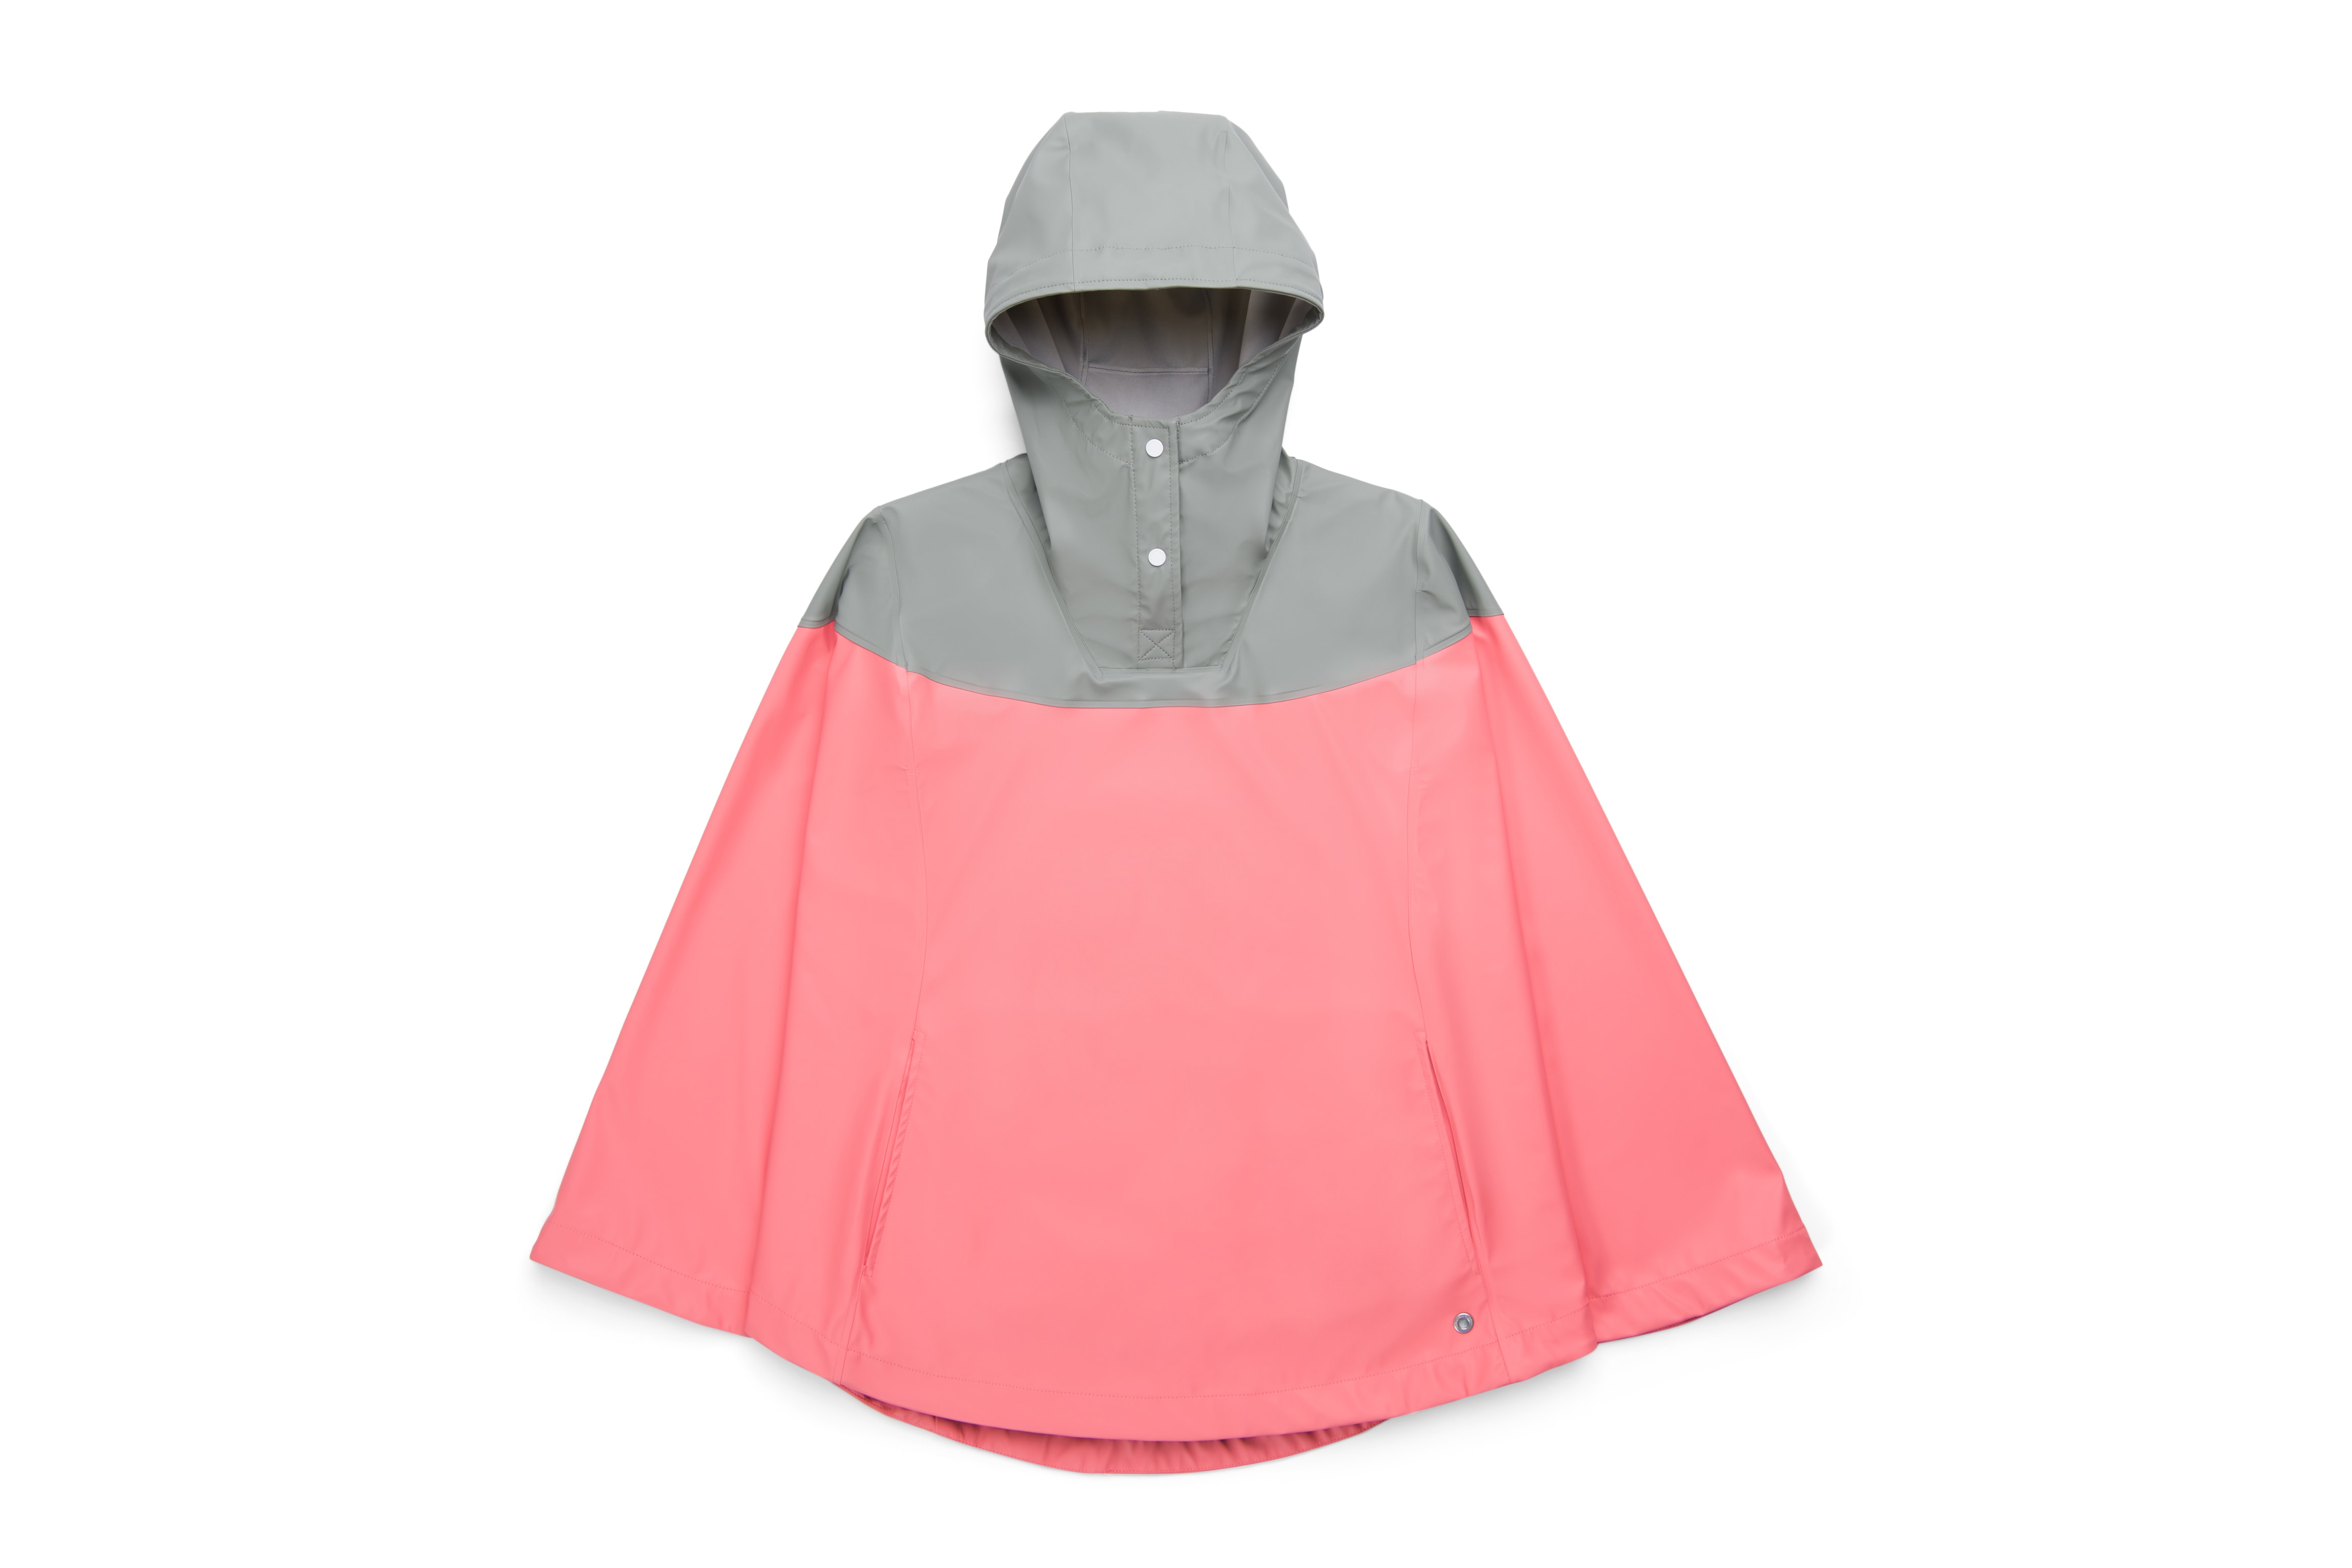 Shop Herschel Supply New Pink Jackets Outerwear Raincoat Bomber Jacket Simple Minimal